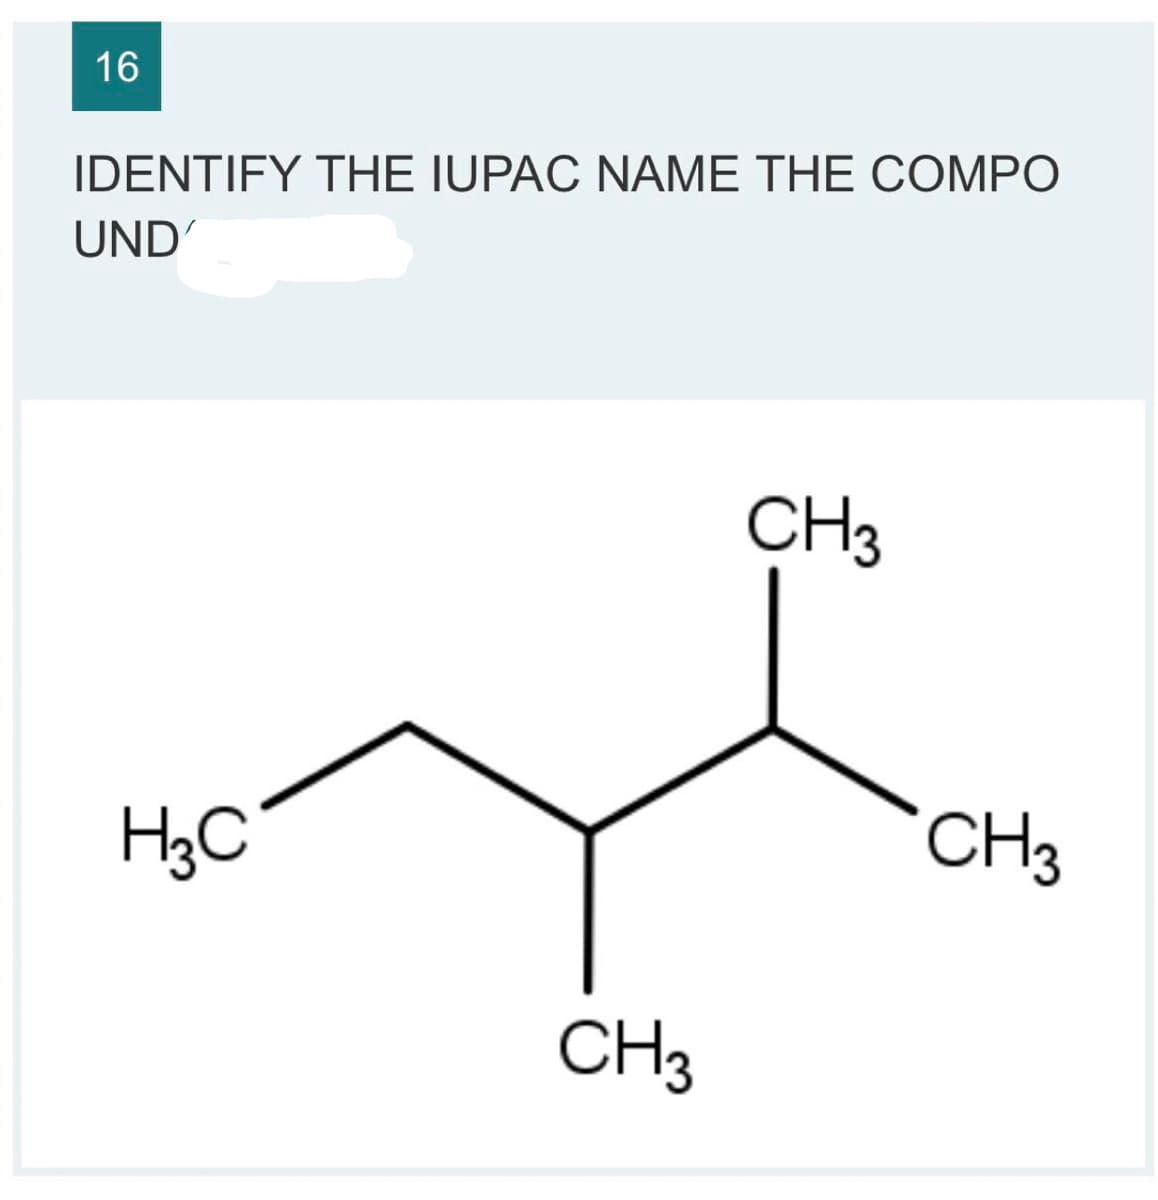 16
IDENTIFY THE IUPAC NAME THE COMPO
UND
H3C
CH3
CH3
CH3